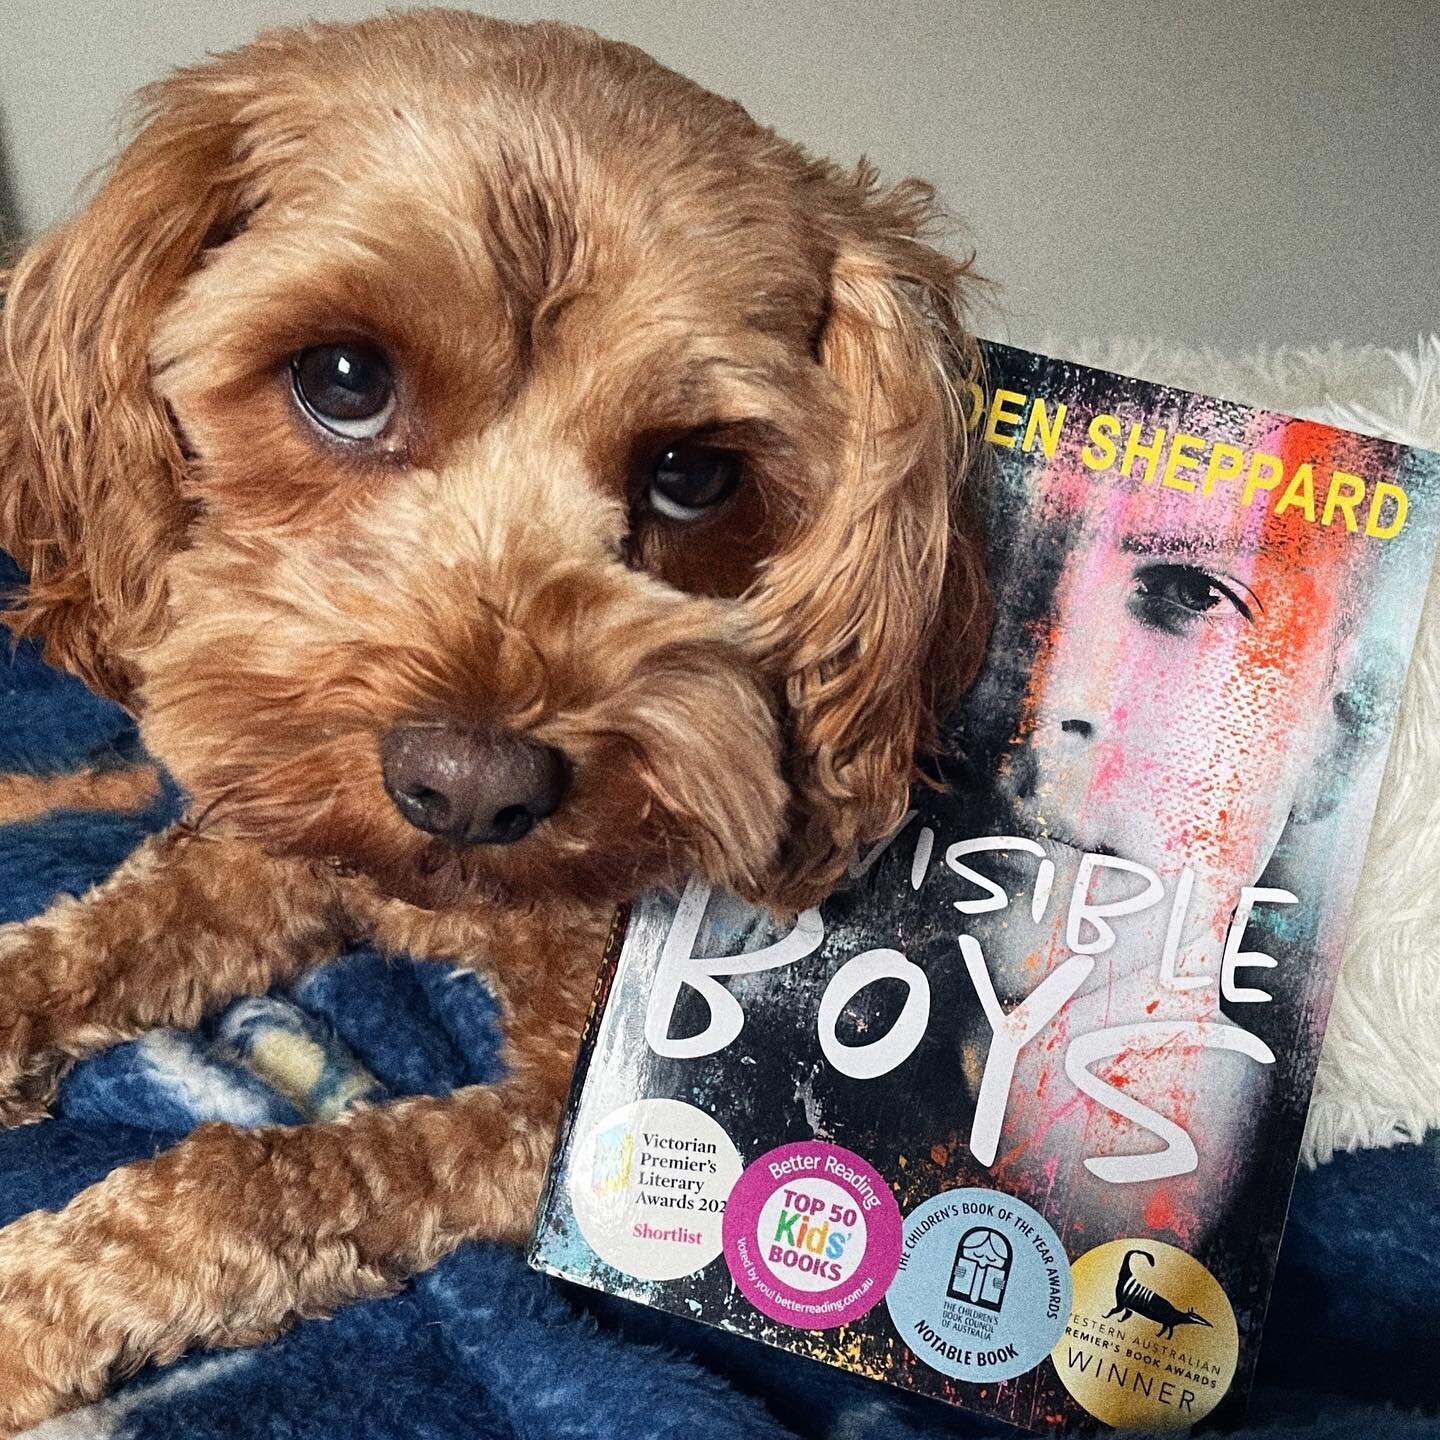 Sassy model, special book 💥

Invisible Boys, by Holden Sheppard @fremantlepress

#books #auslit #cavoodle @holdensheppard